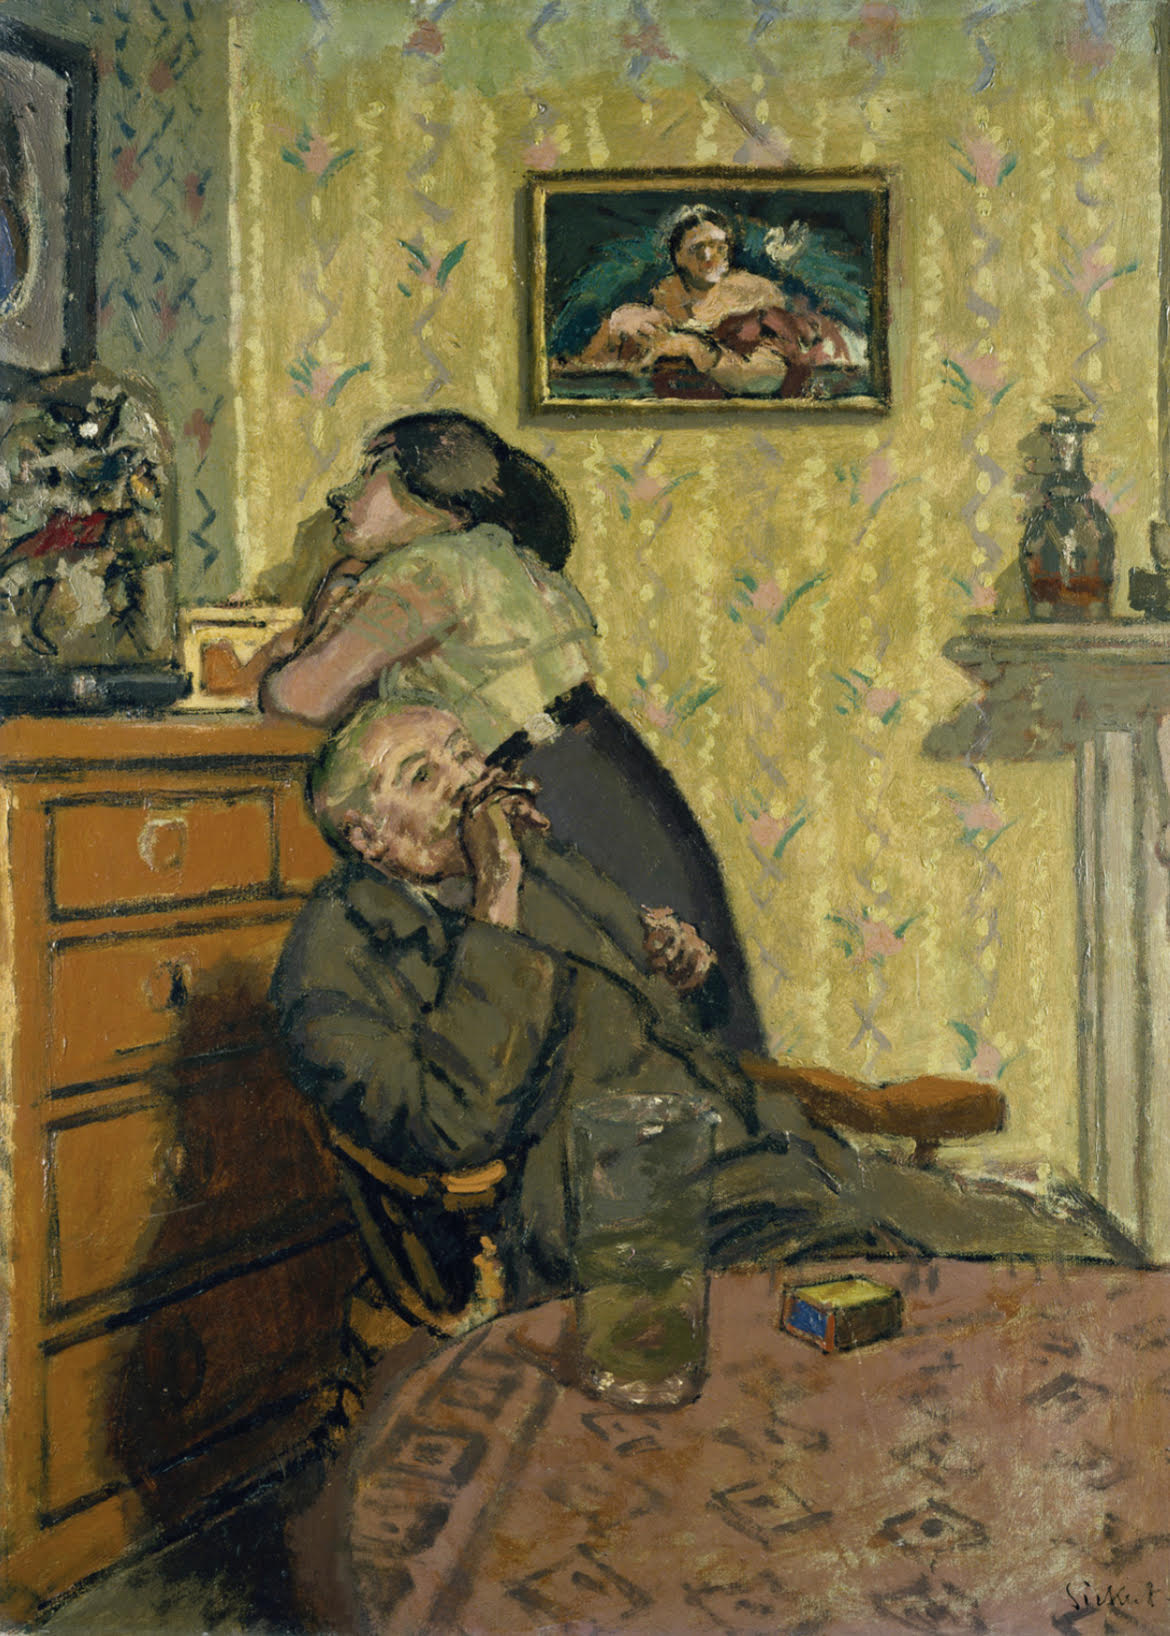 Ennui by Walter Sickert - v. 1914 - 152,4 x 112,4 cm Ashmolean Museum